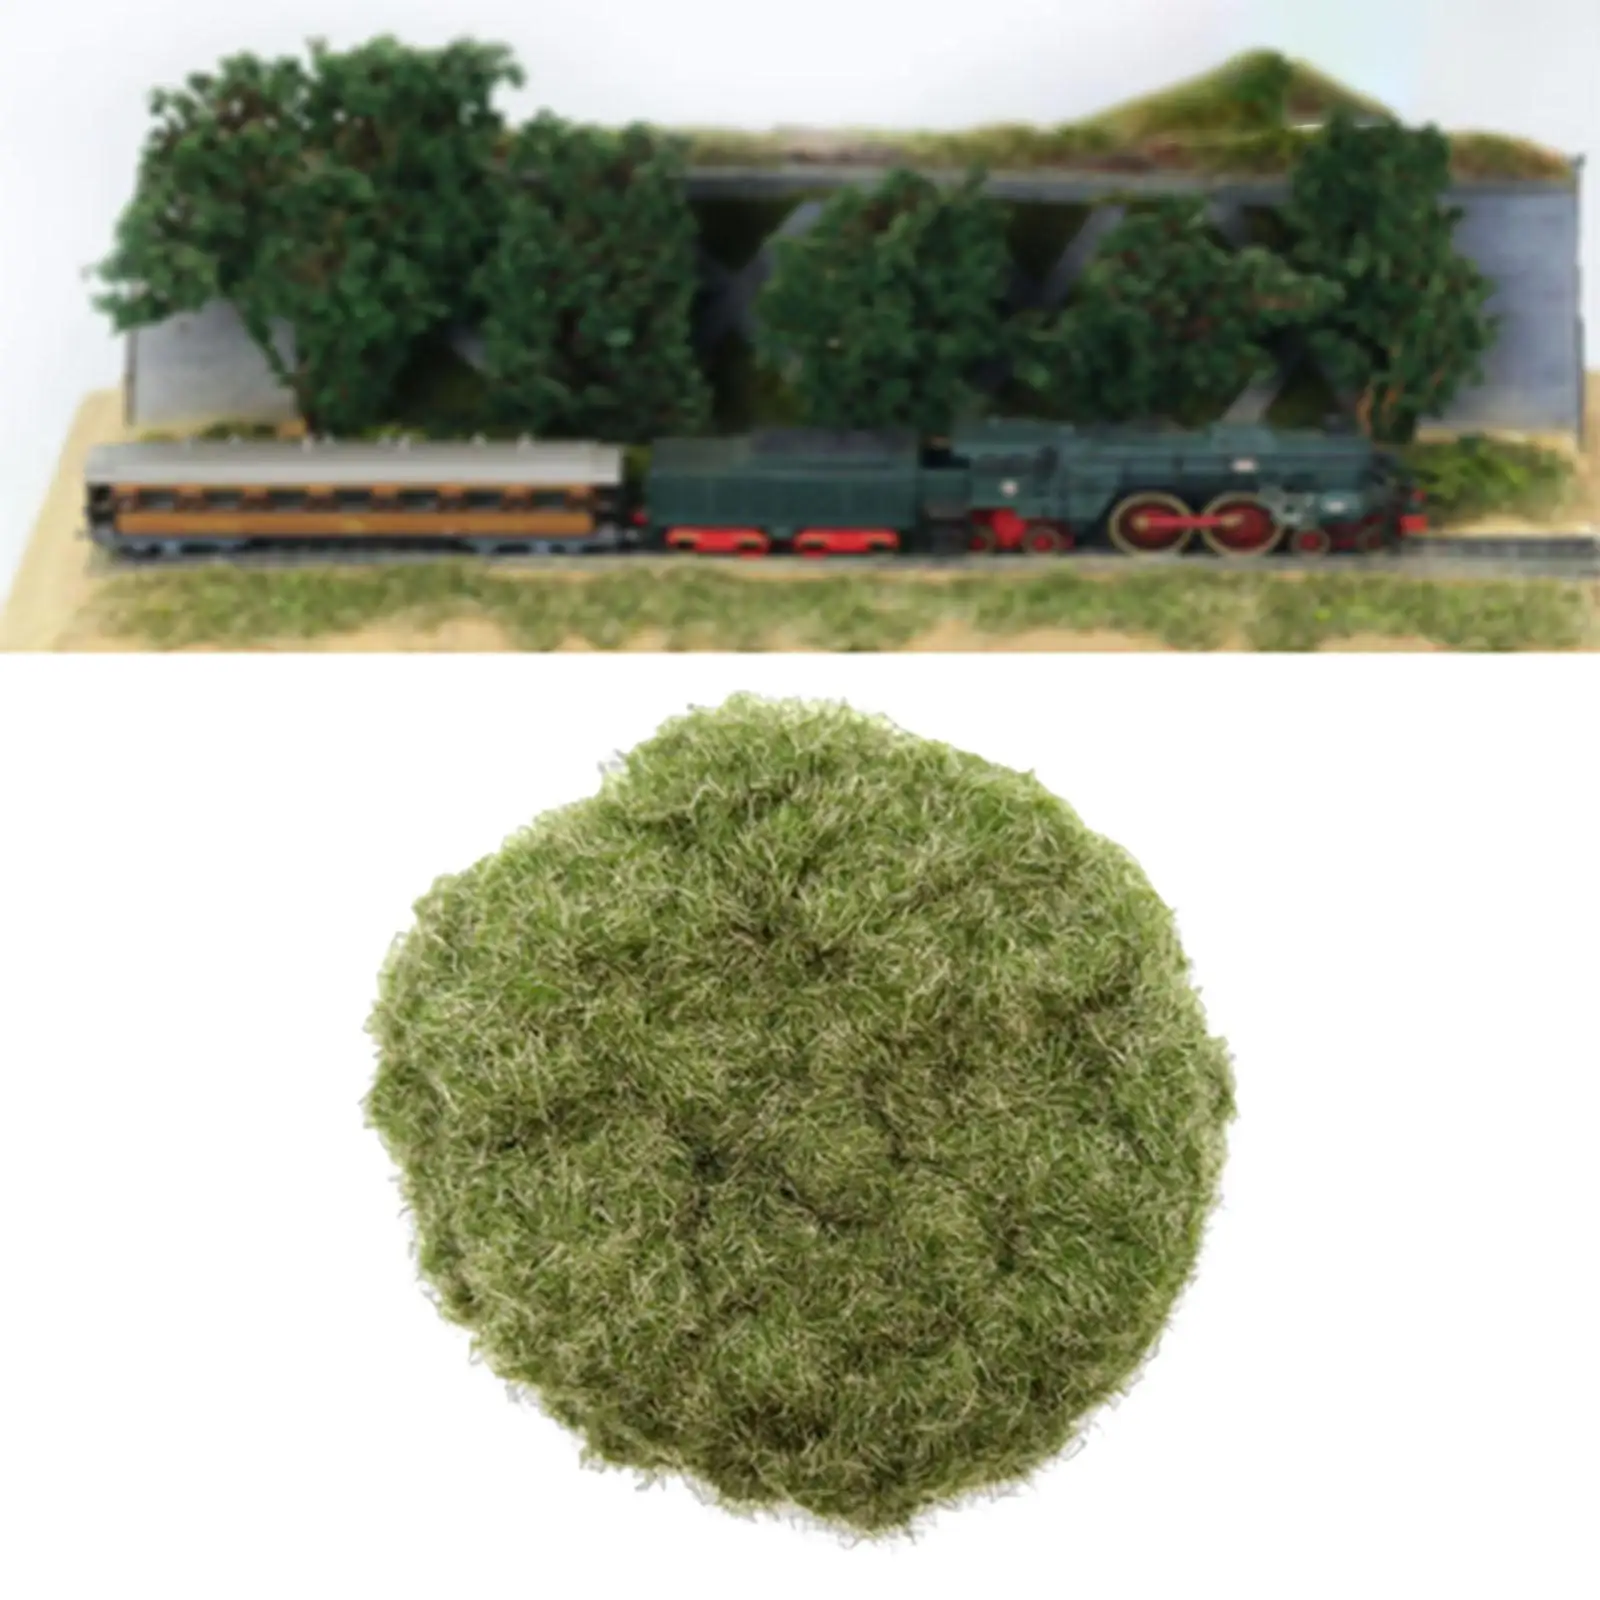 Grass Terrain Powder Miniature Model Micro Landscape Building Sand Table DIY